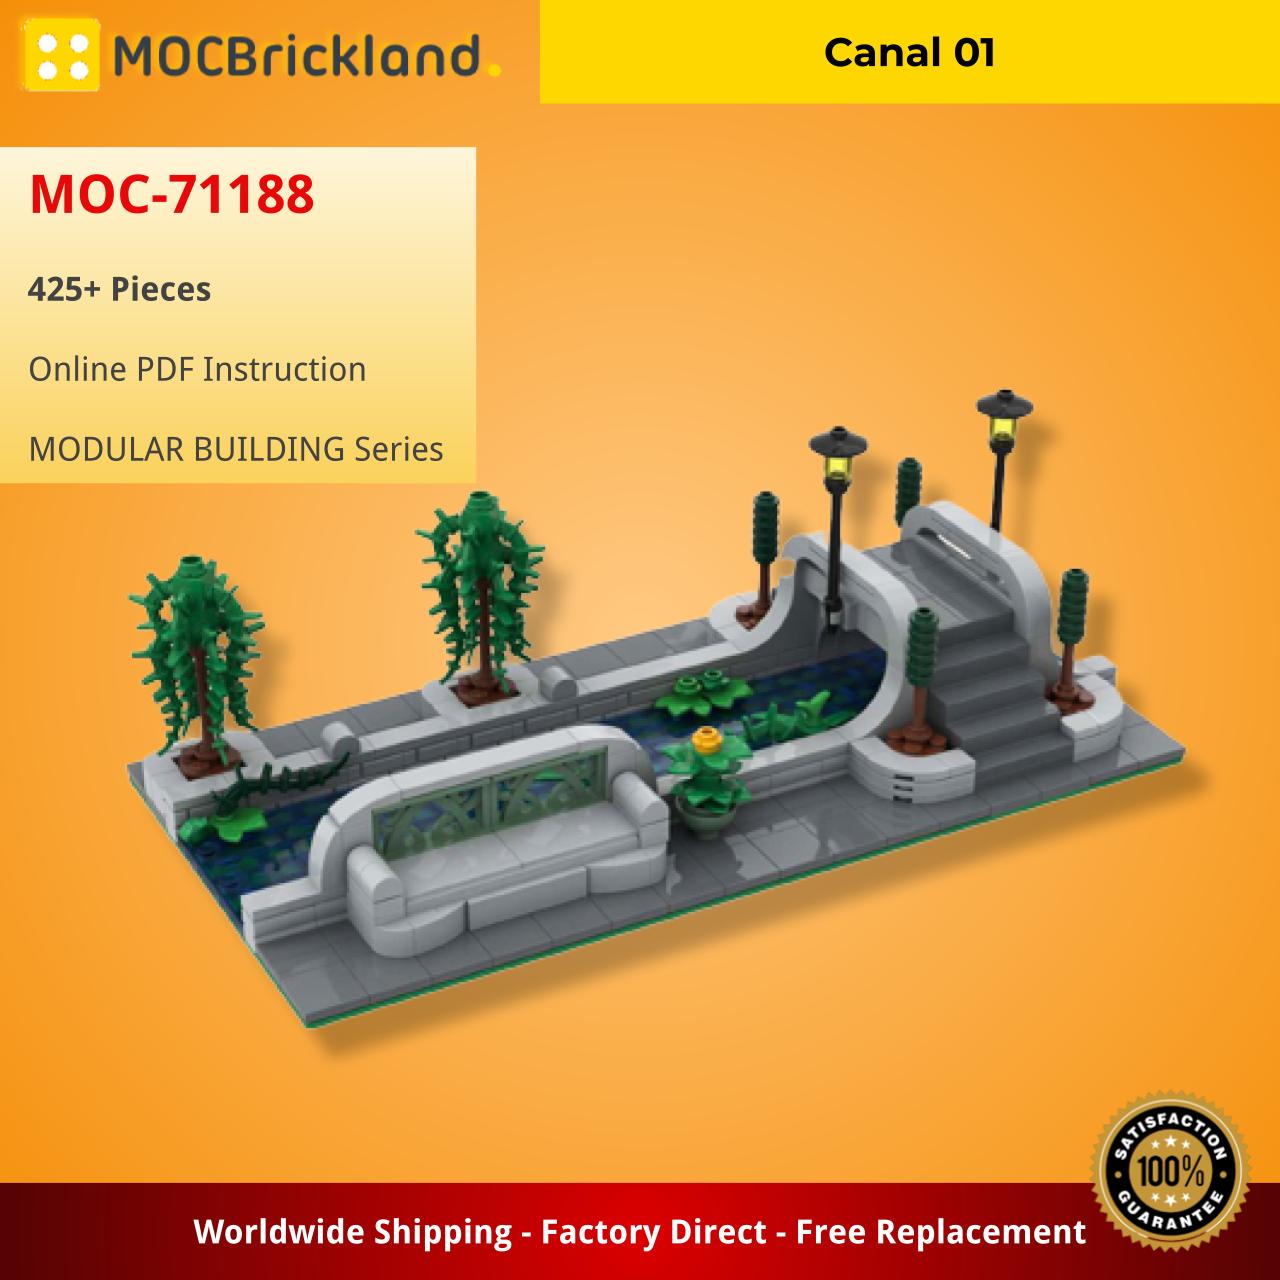 MOCBRICKLAND MOC-71188 Canal 01